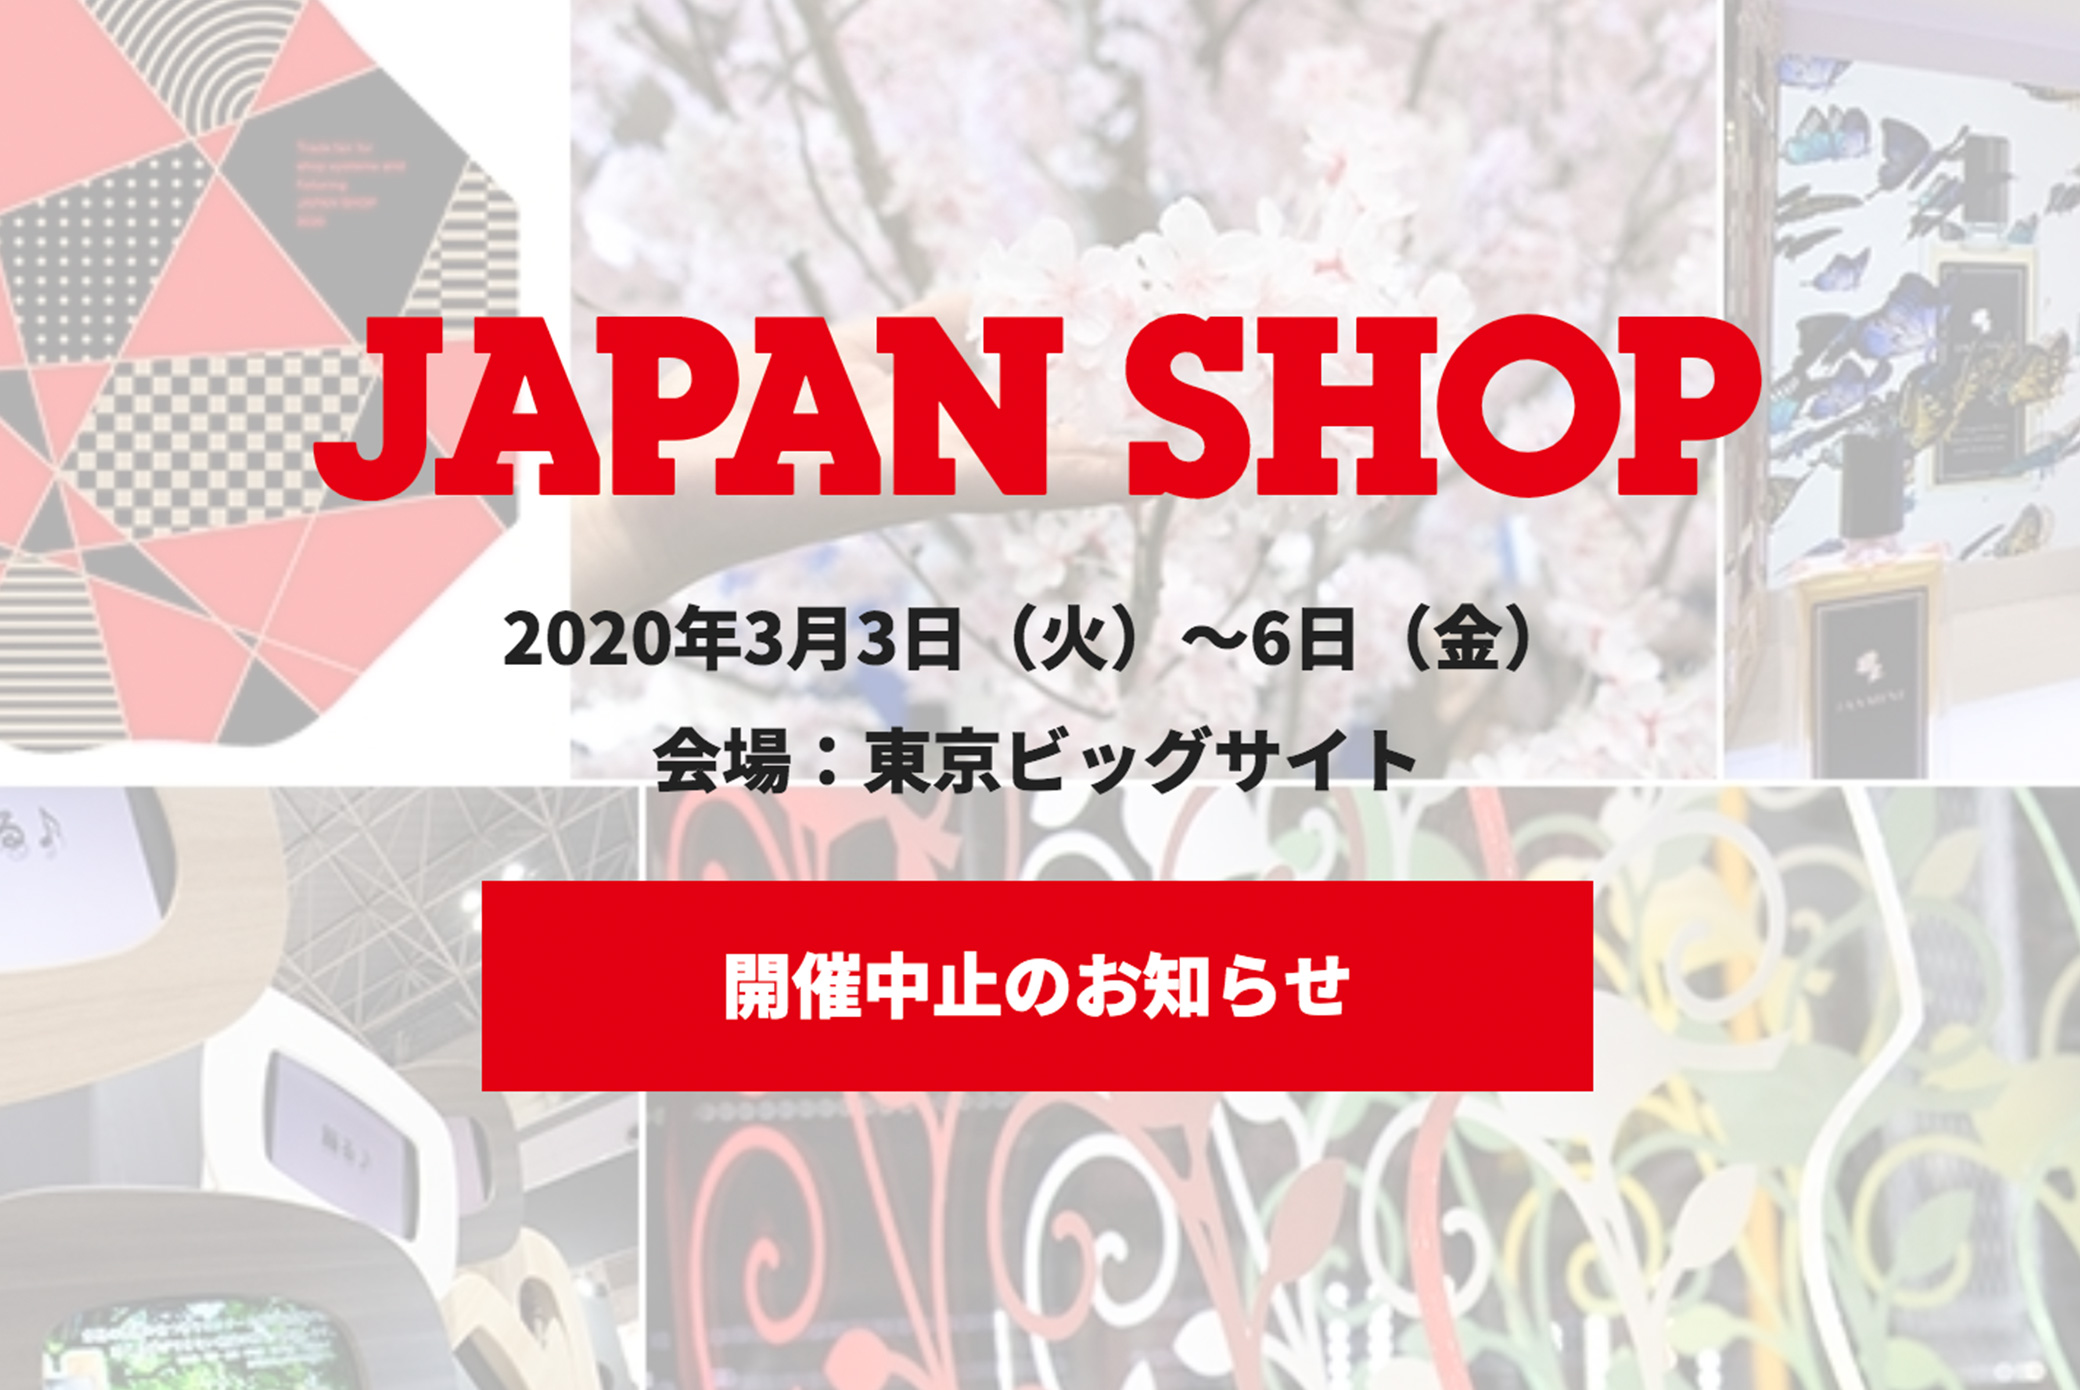 JAPAN SHOP 2020 開催中止のお知らせ